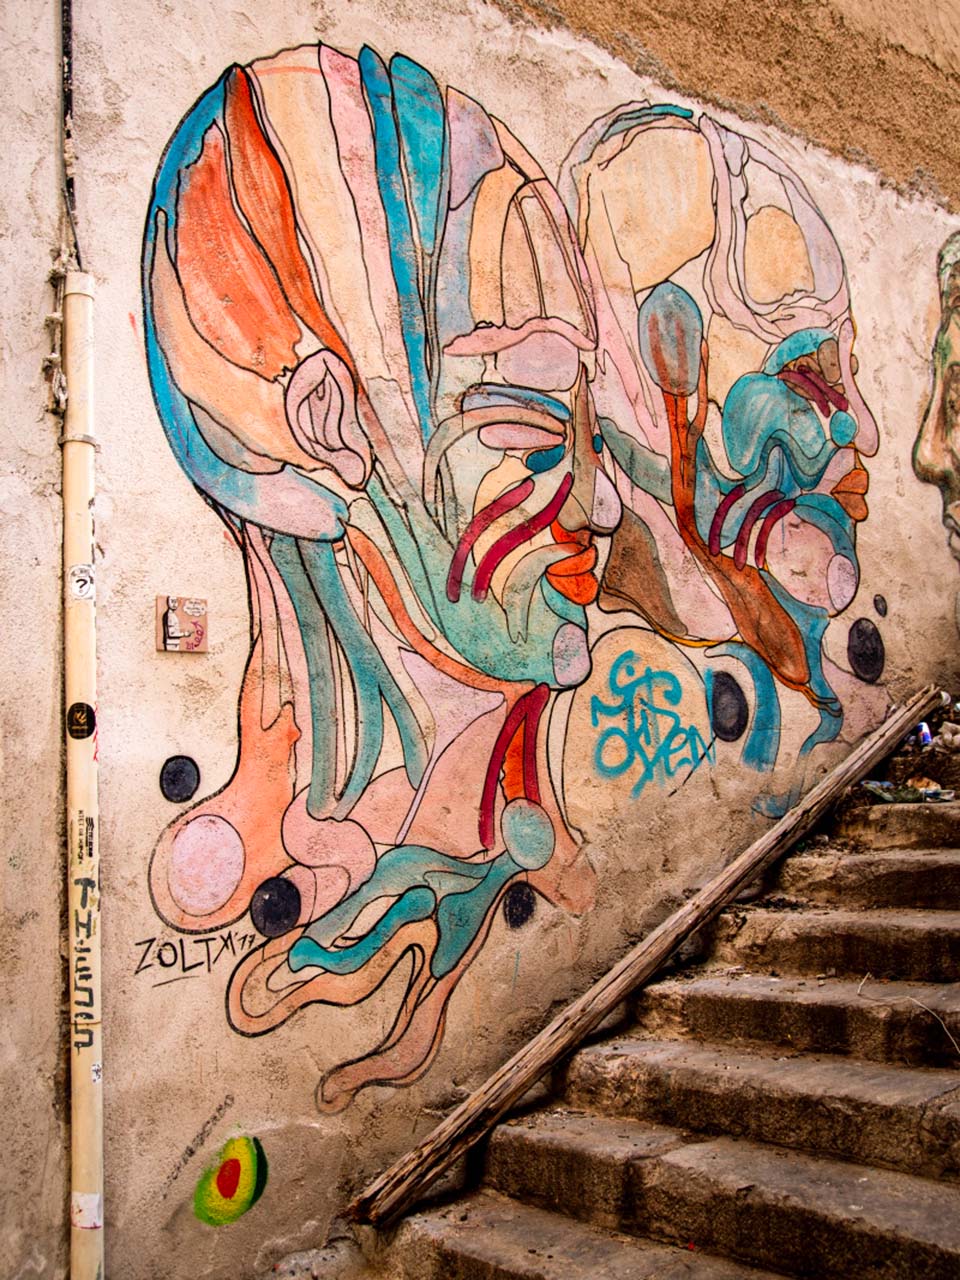 street art work by Zolta in Palermo